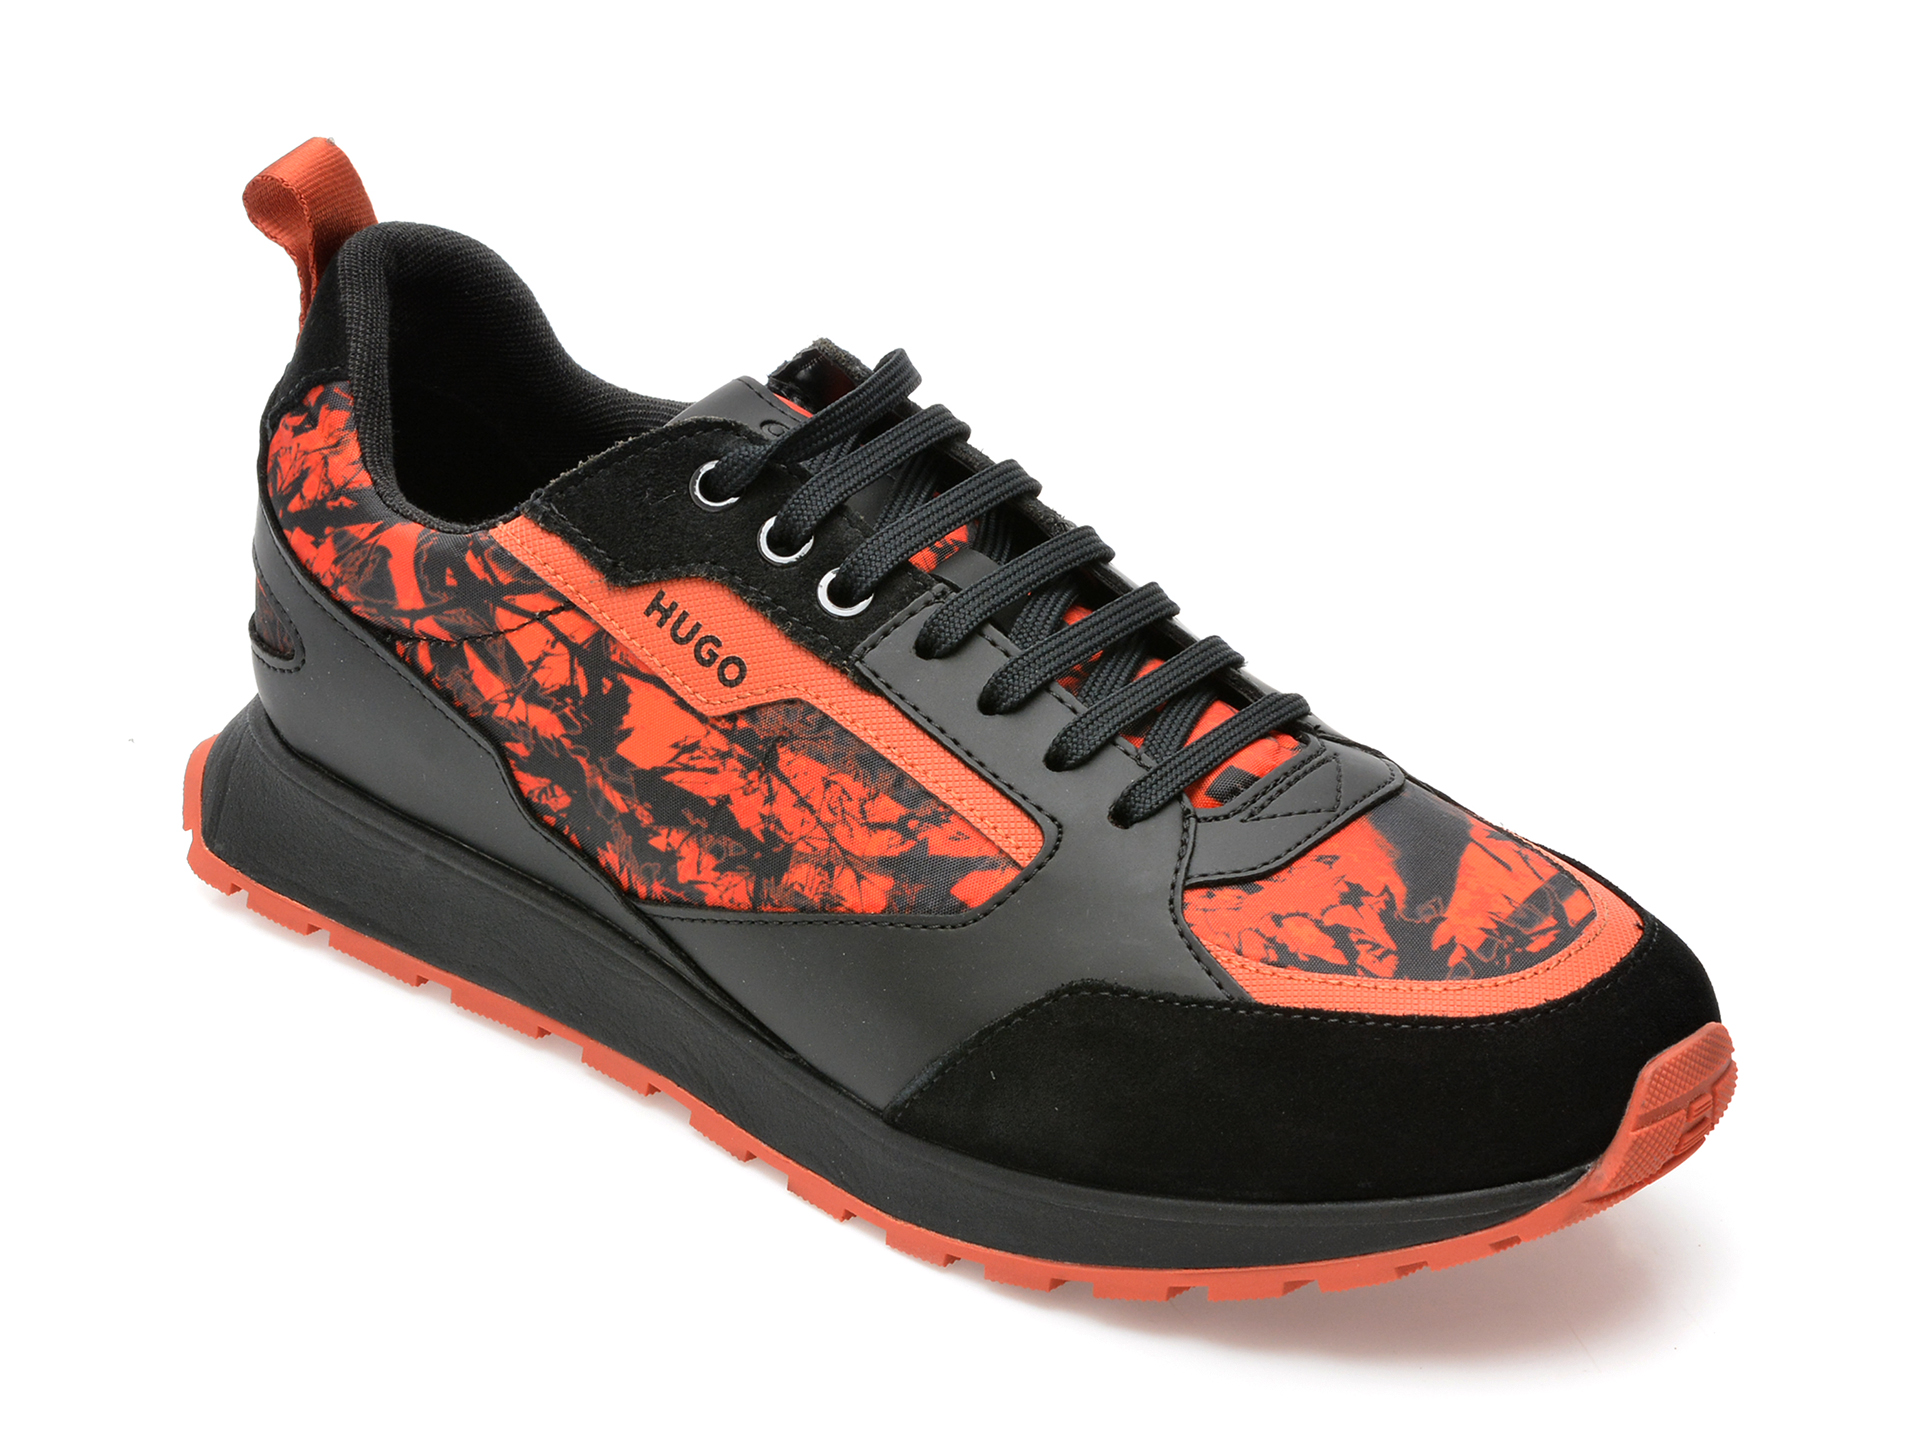 Pantofi sport HUGO BOSS portocalii, 318, din material textil si piele ecologica